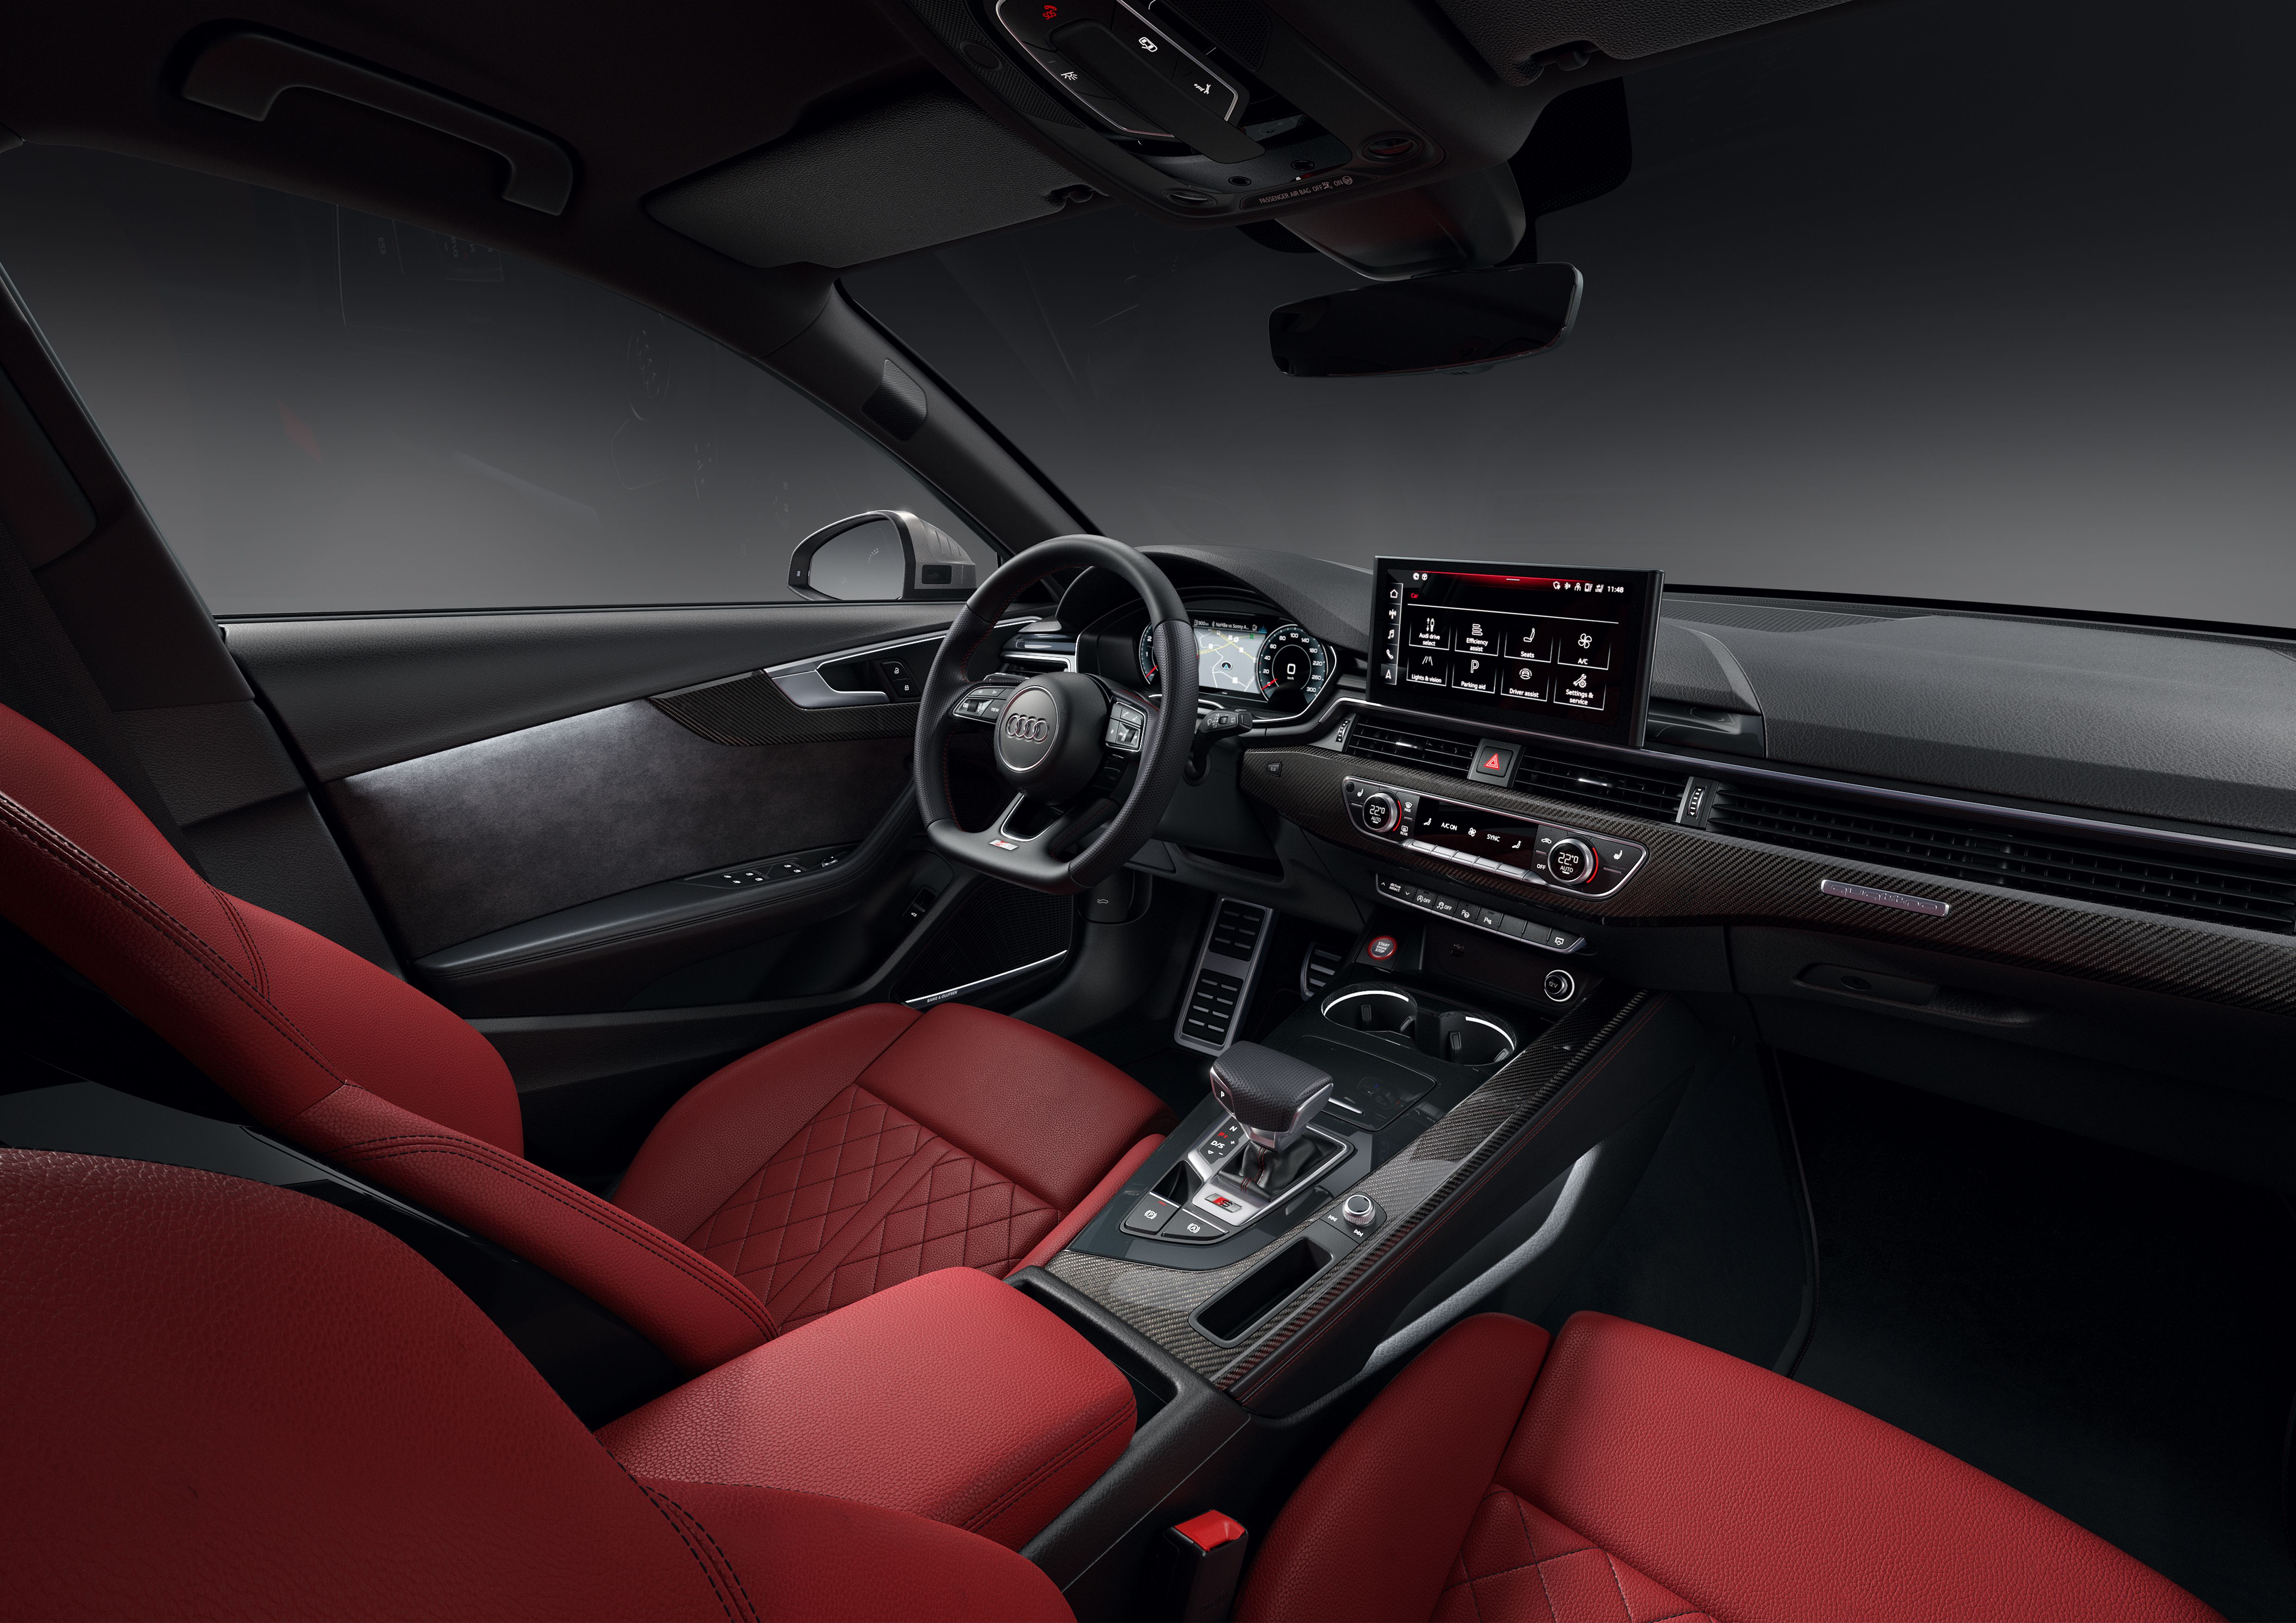 2020 Audi S4 Avant